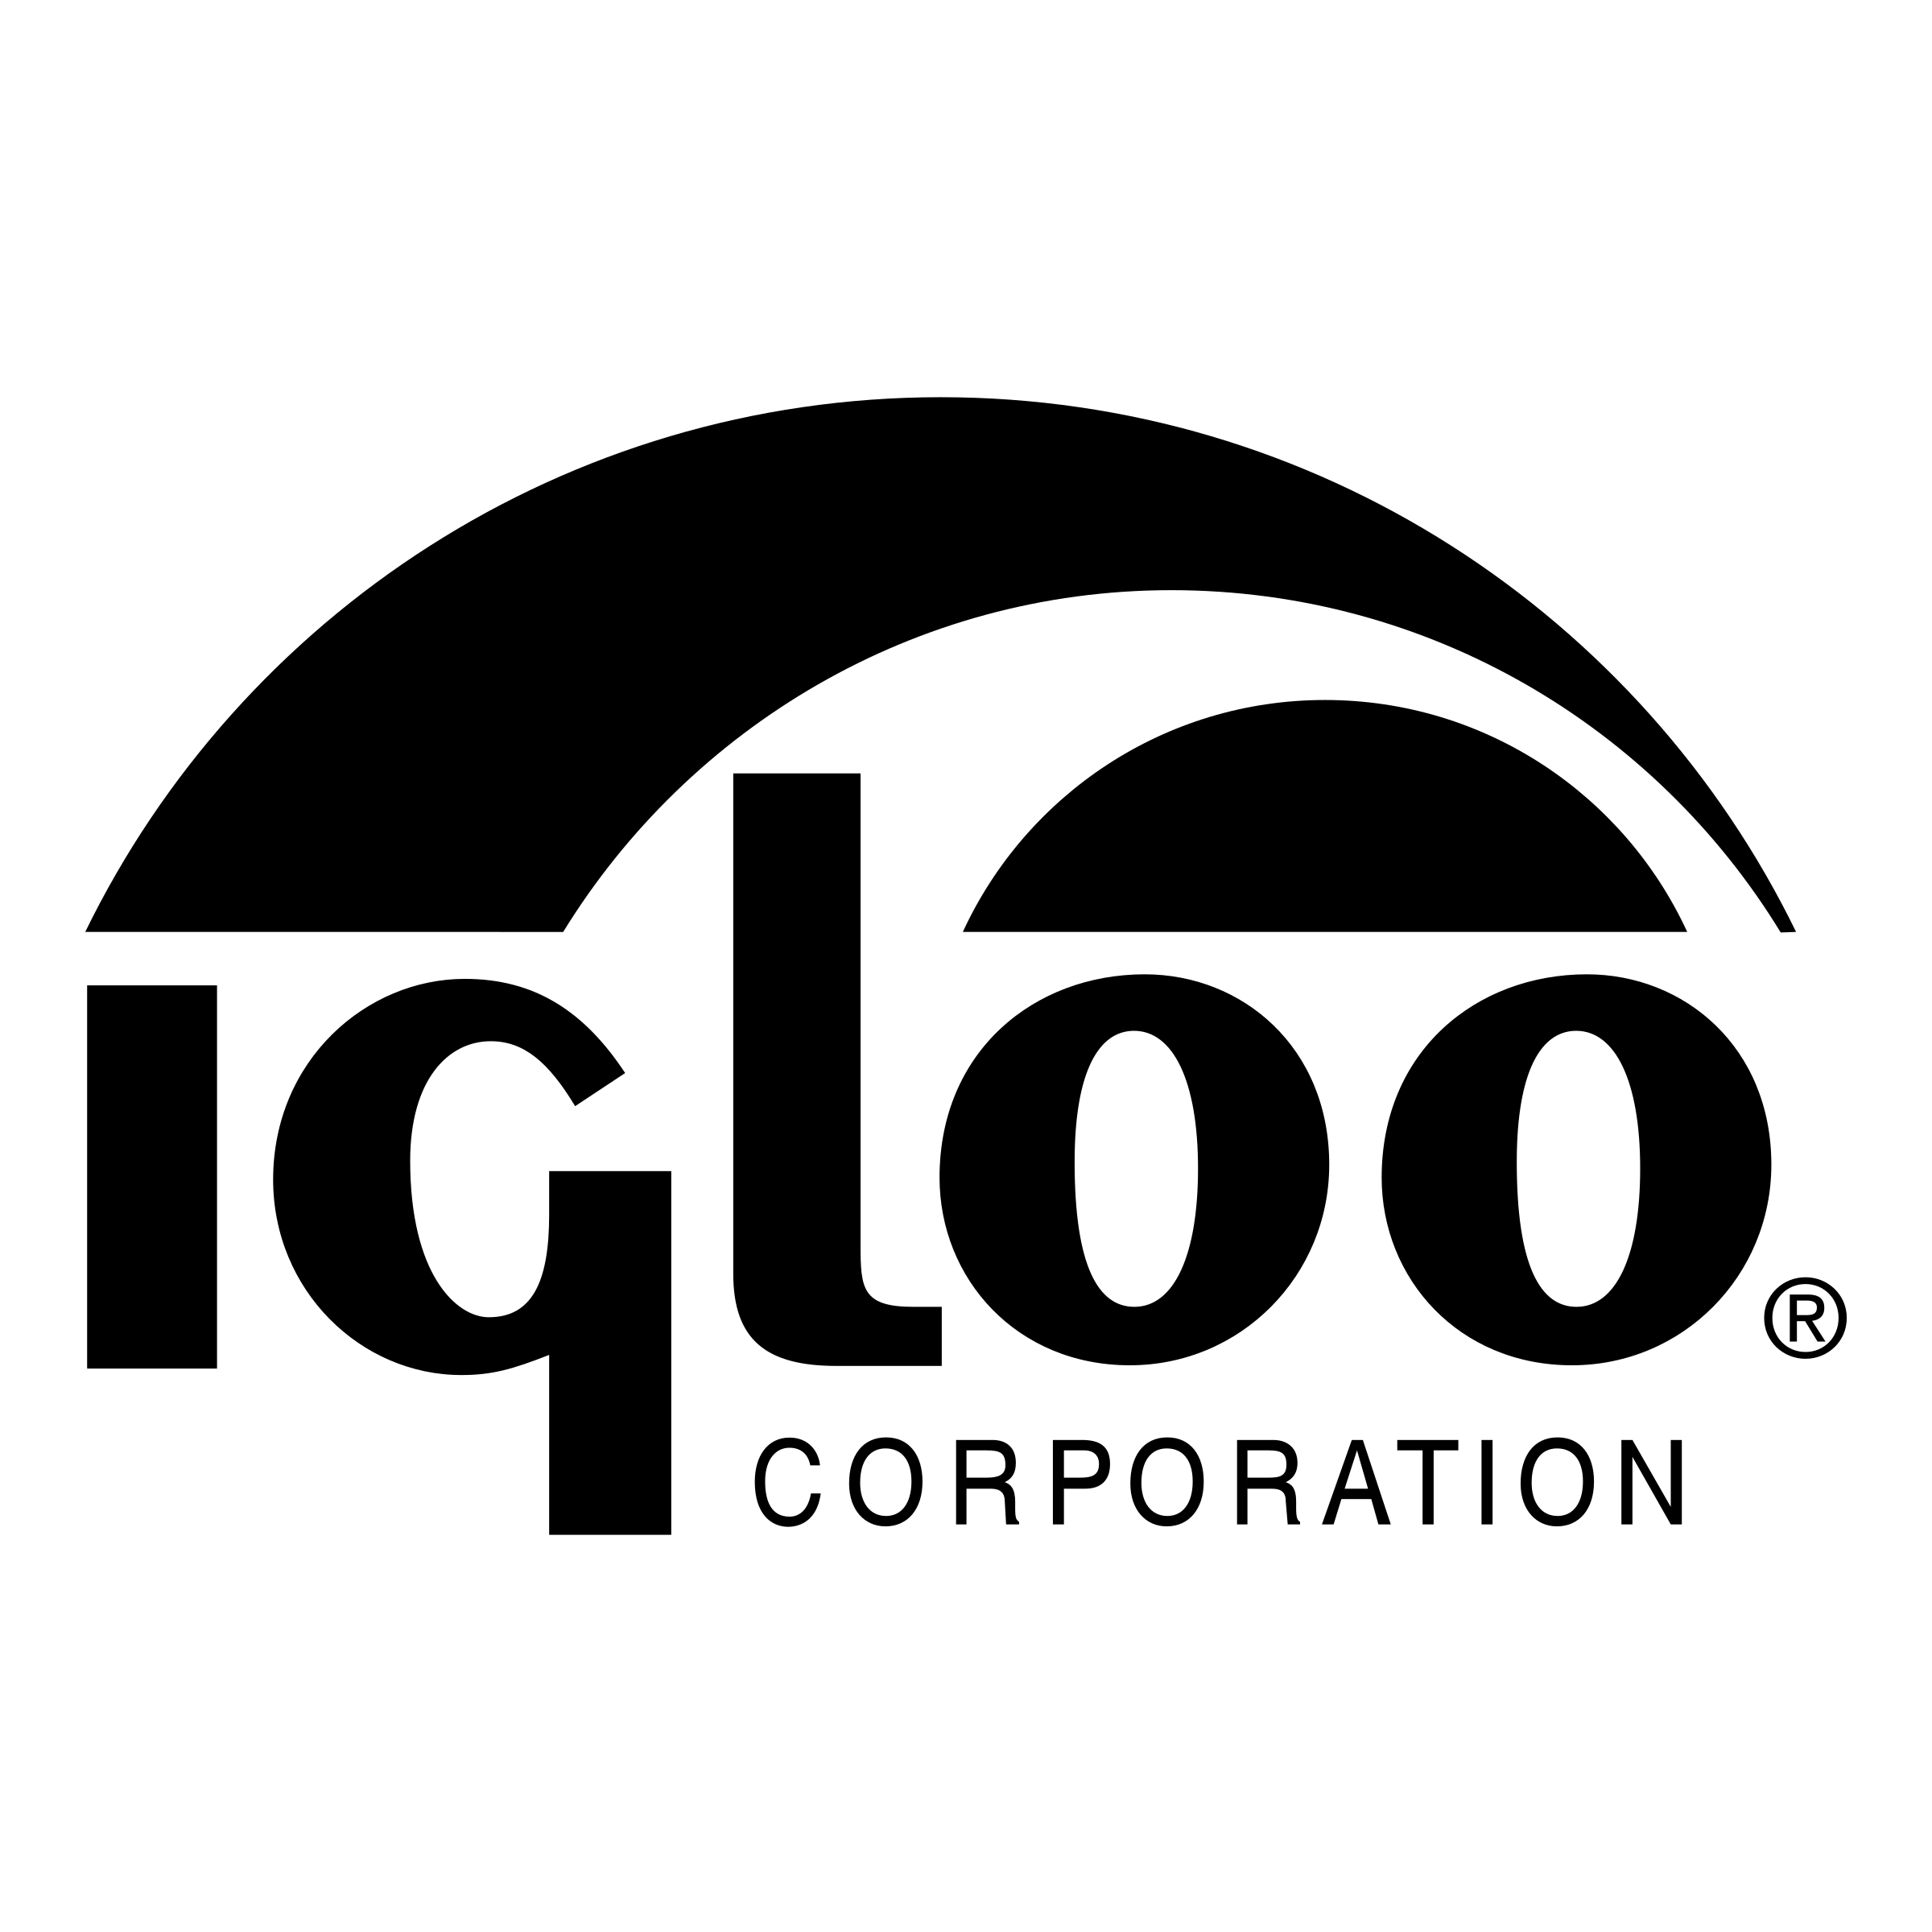 Igloo Logo - Igloo Logo PNG Transparent & SVG Vector - Freebie Supply